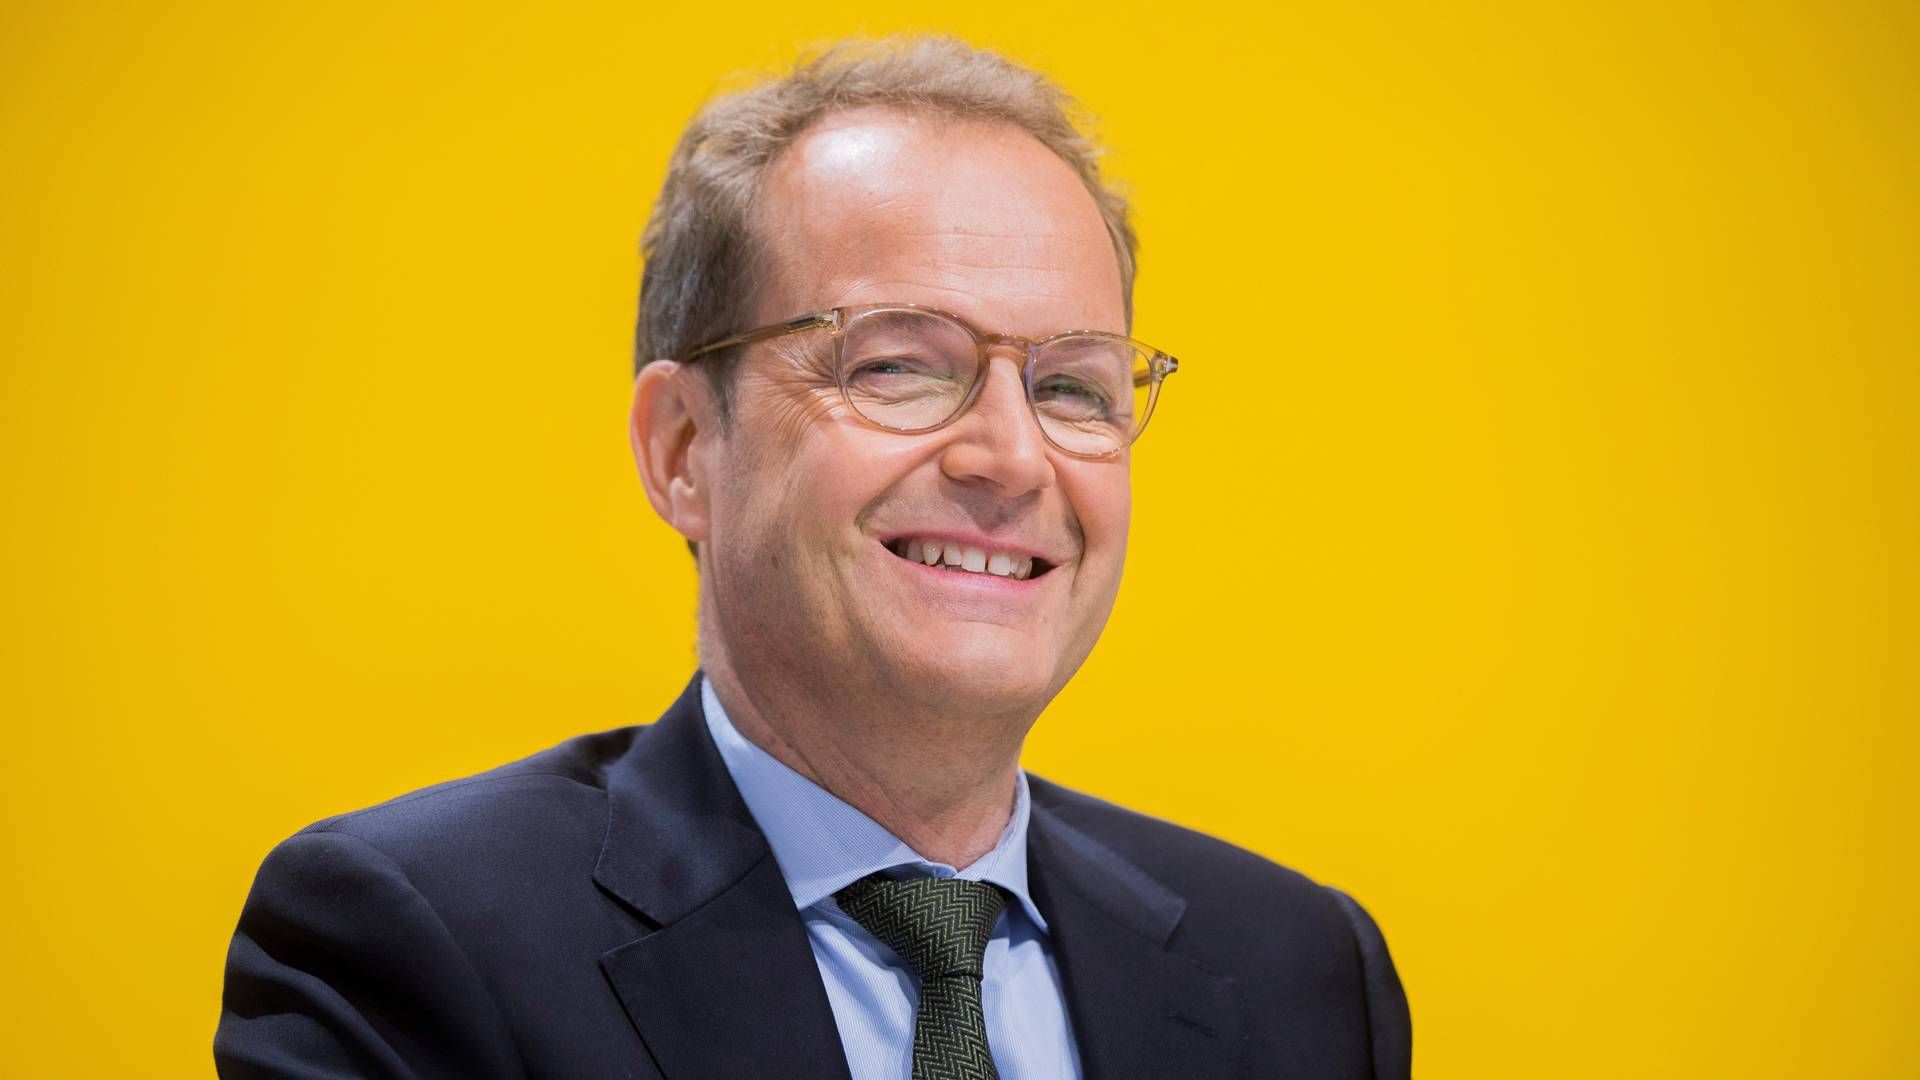 Tim Scharwath er adm. direktør for DHL's globale speditørforretning. | Foto: Rolf Vennenbernd/AP/Ritzau Scanpix